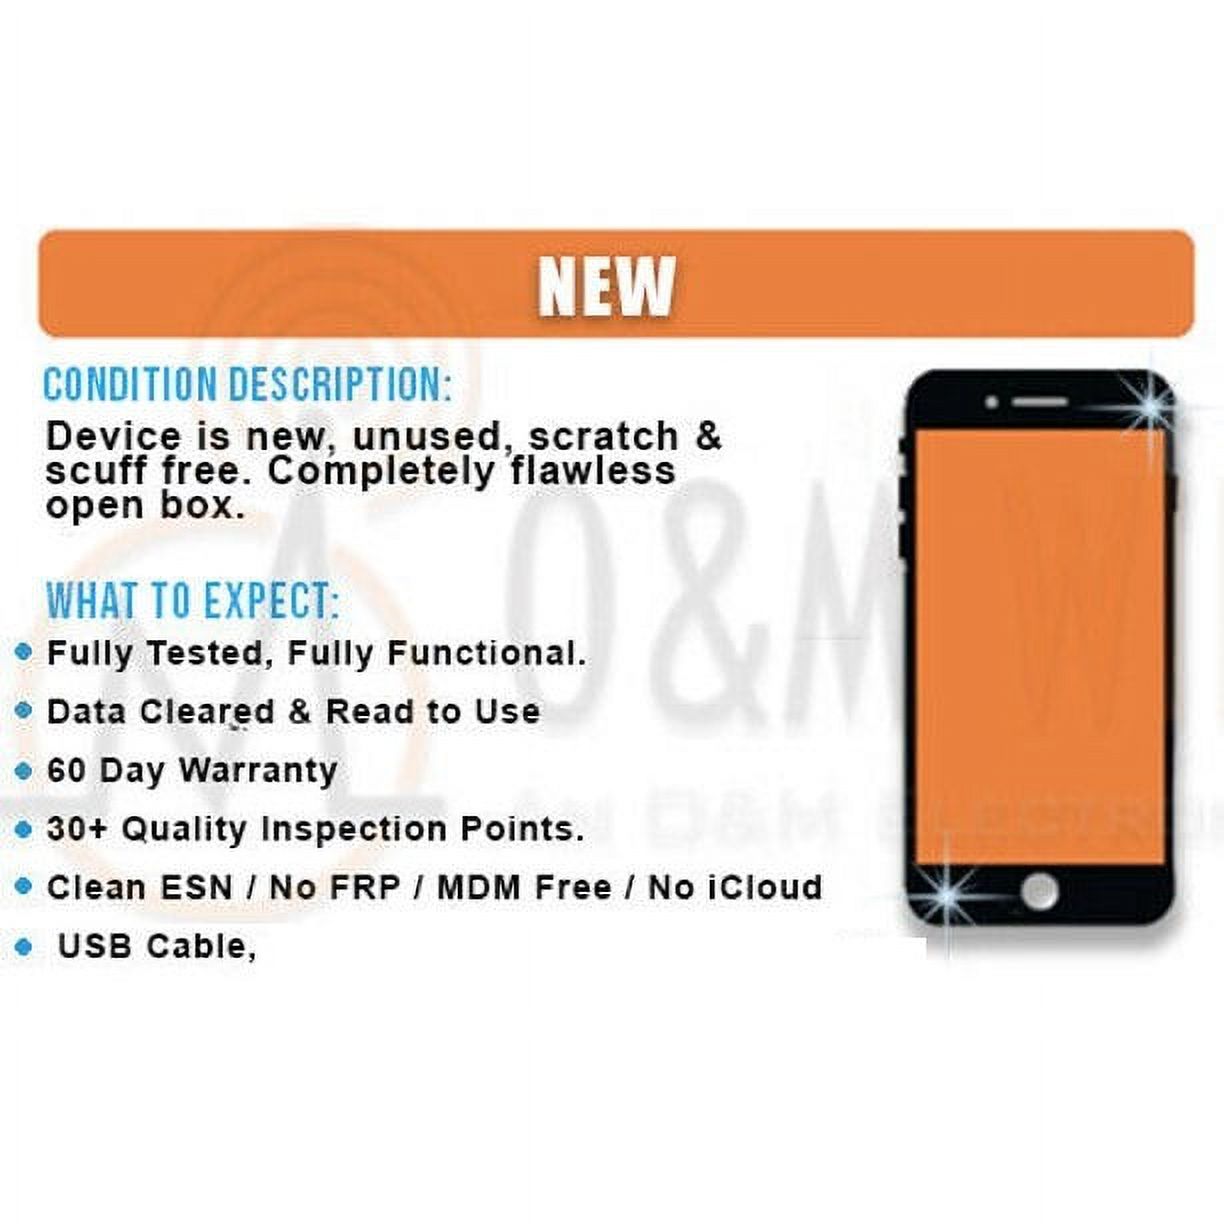 Like New Samsung Galaxy S21 Ultra 5G SM-G998U1 128GB Black (US Model) - Factory Unlocked Cell Phone - image 2 of 3